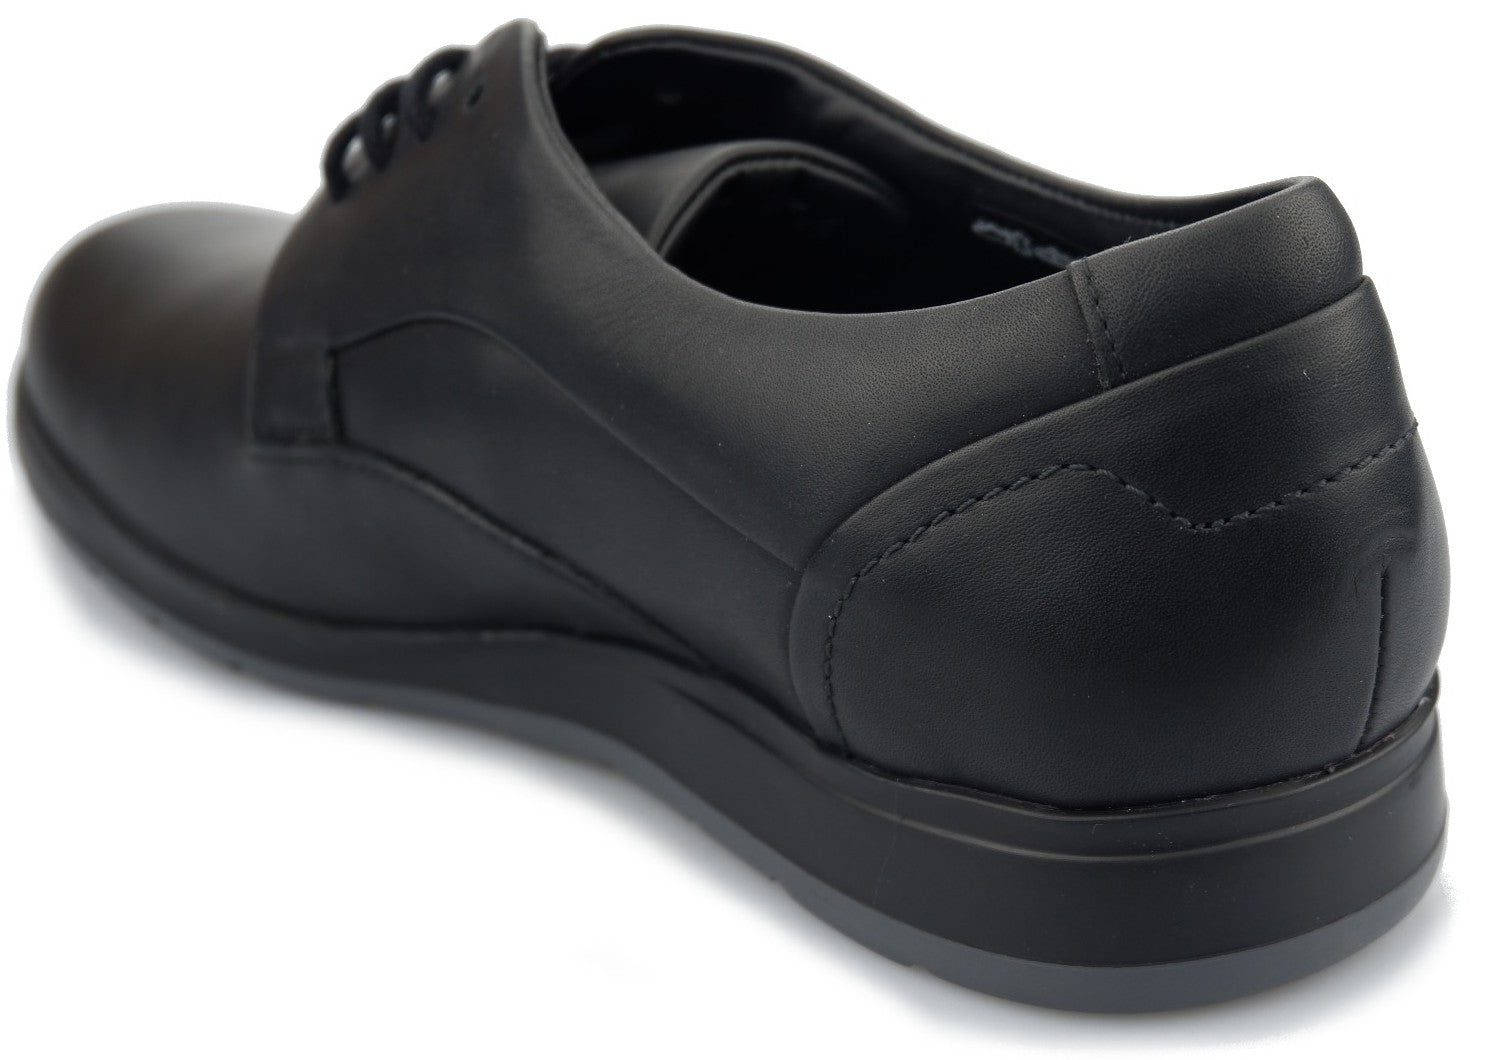 Mephisto VALERIO POLO Men's Lace-up Shoe - Black Leather - ChaplinshoesMephisto VALERIO POLO Men's Lace-up Shoe - Black LeatherMephisto